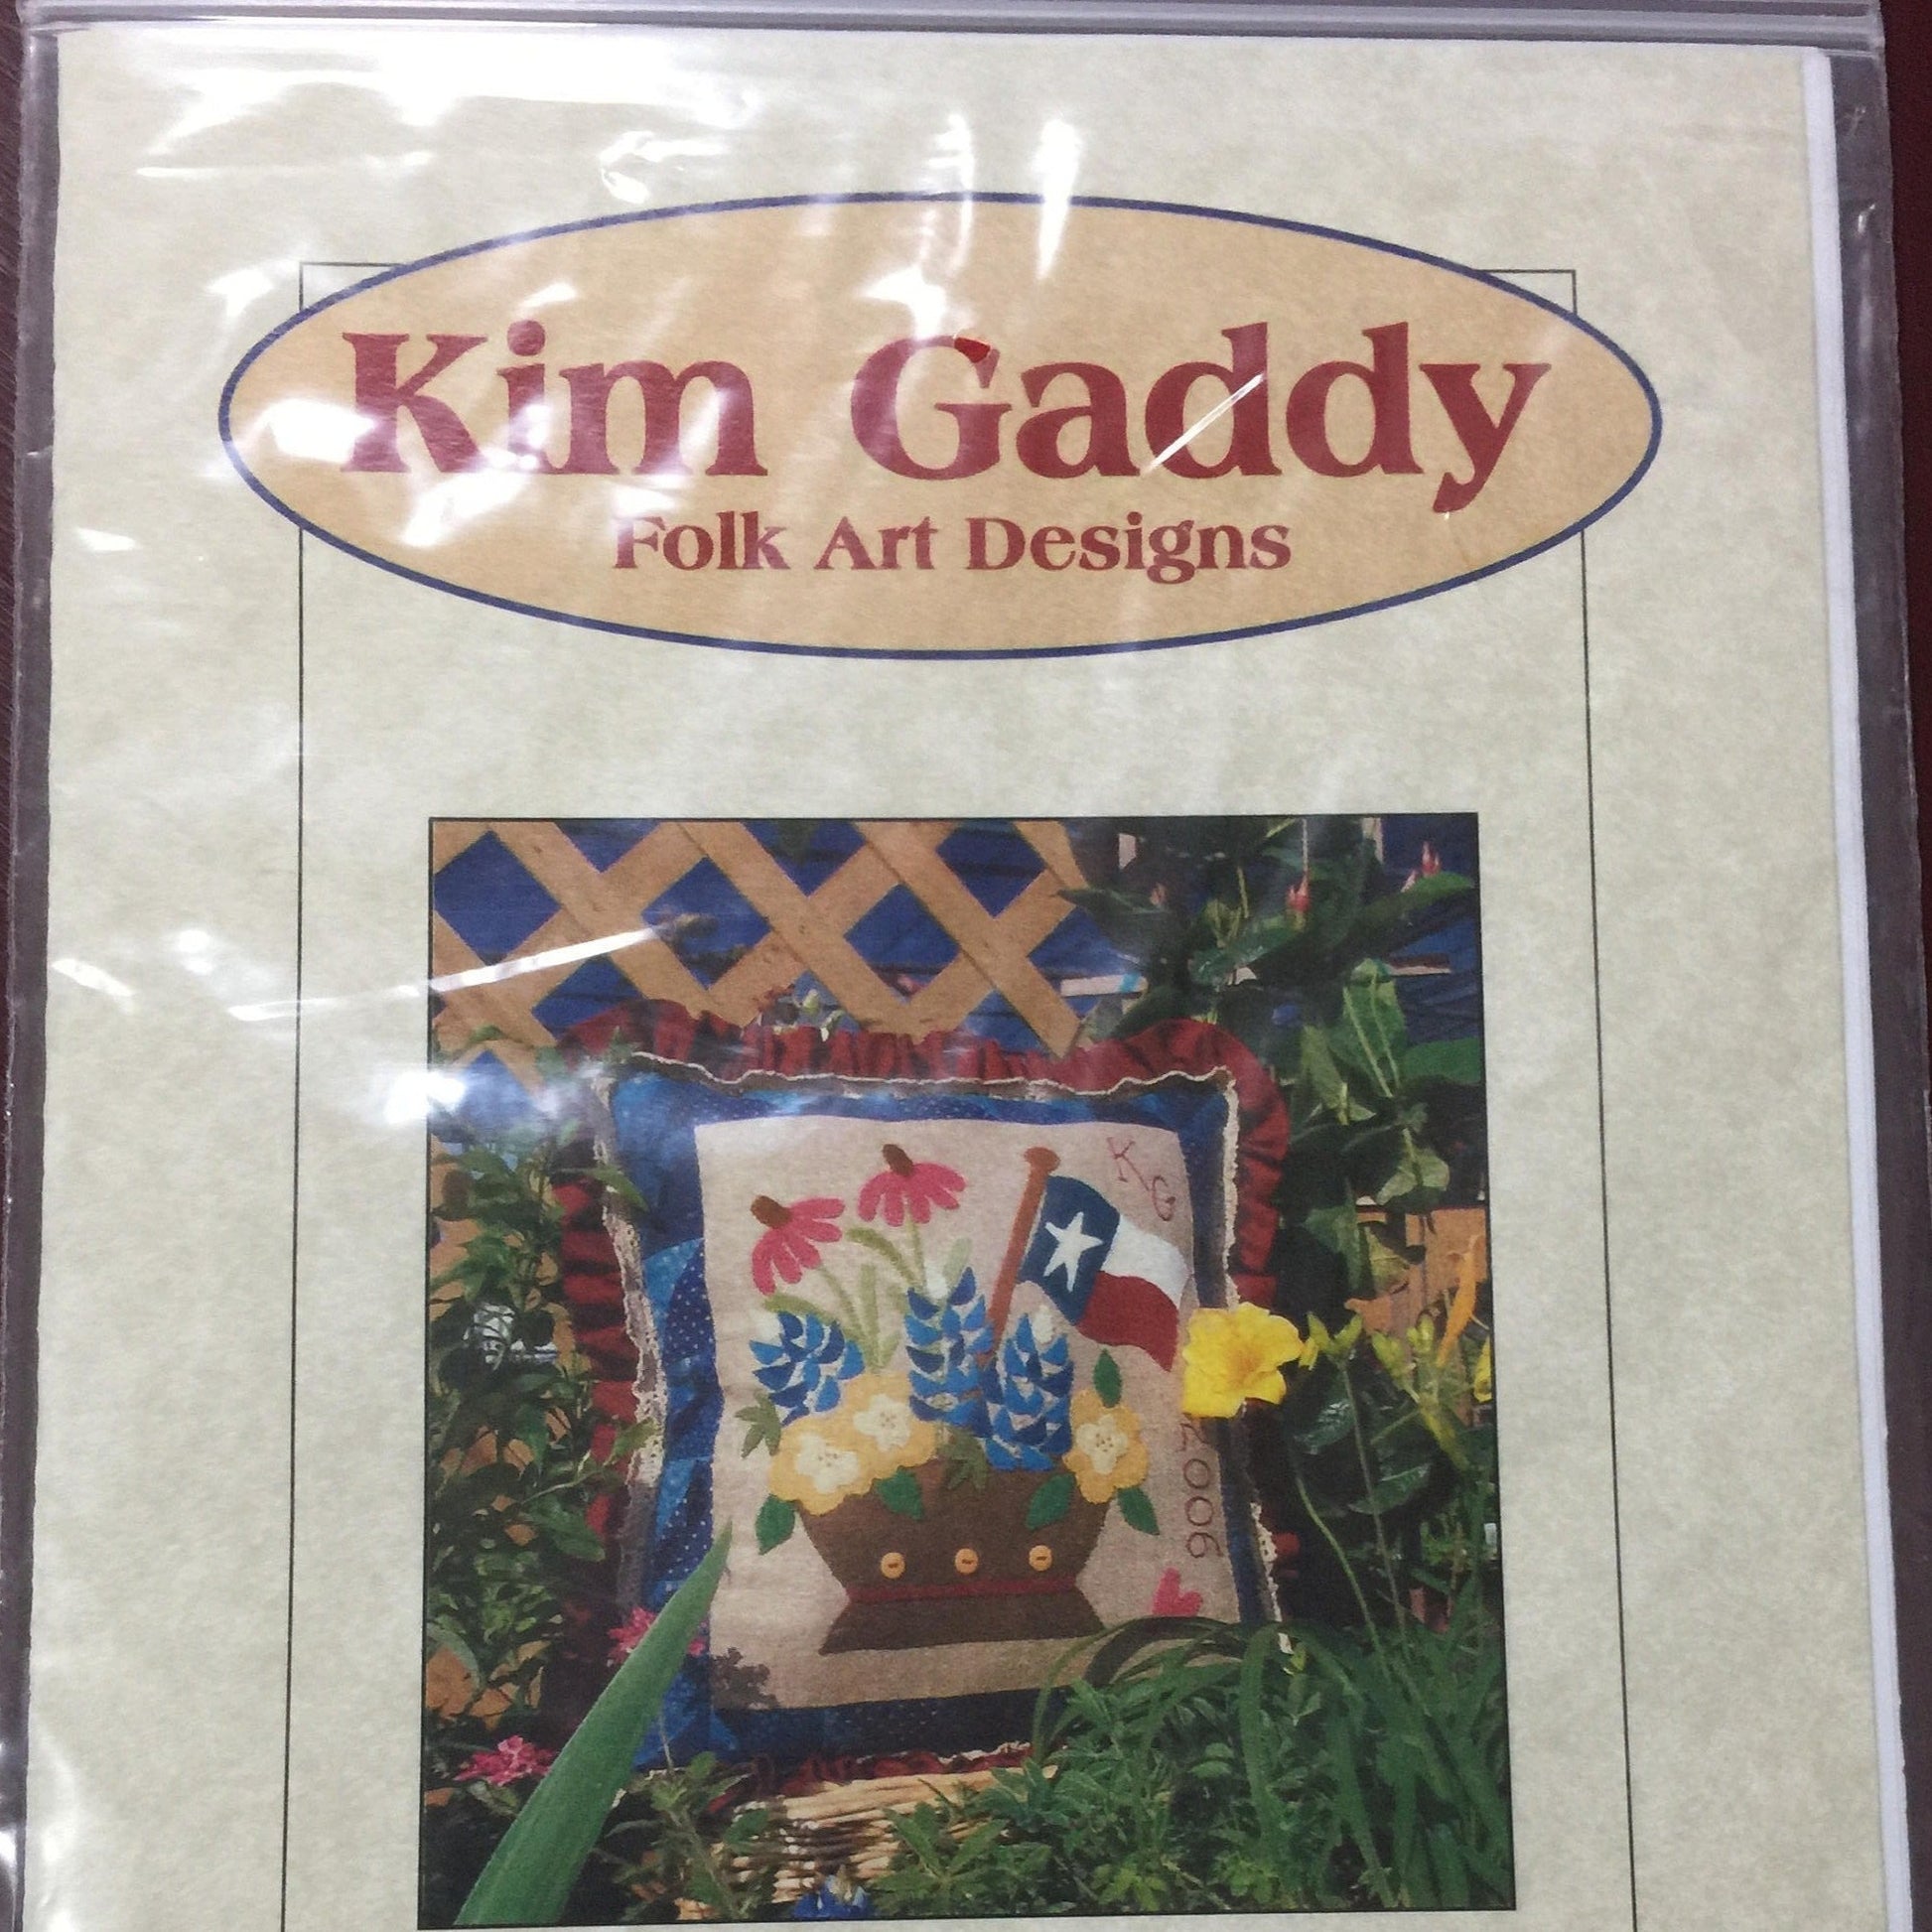 Kim Gaddy Folk Art Designs "Texas Bouquet" felt embroidery pattern, hard to find